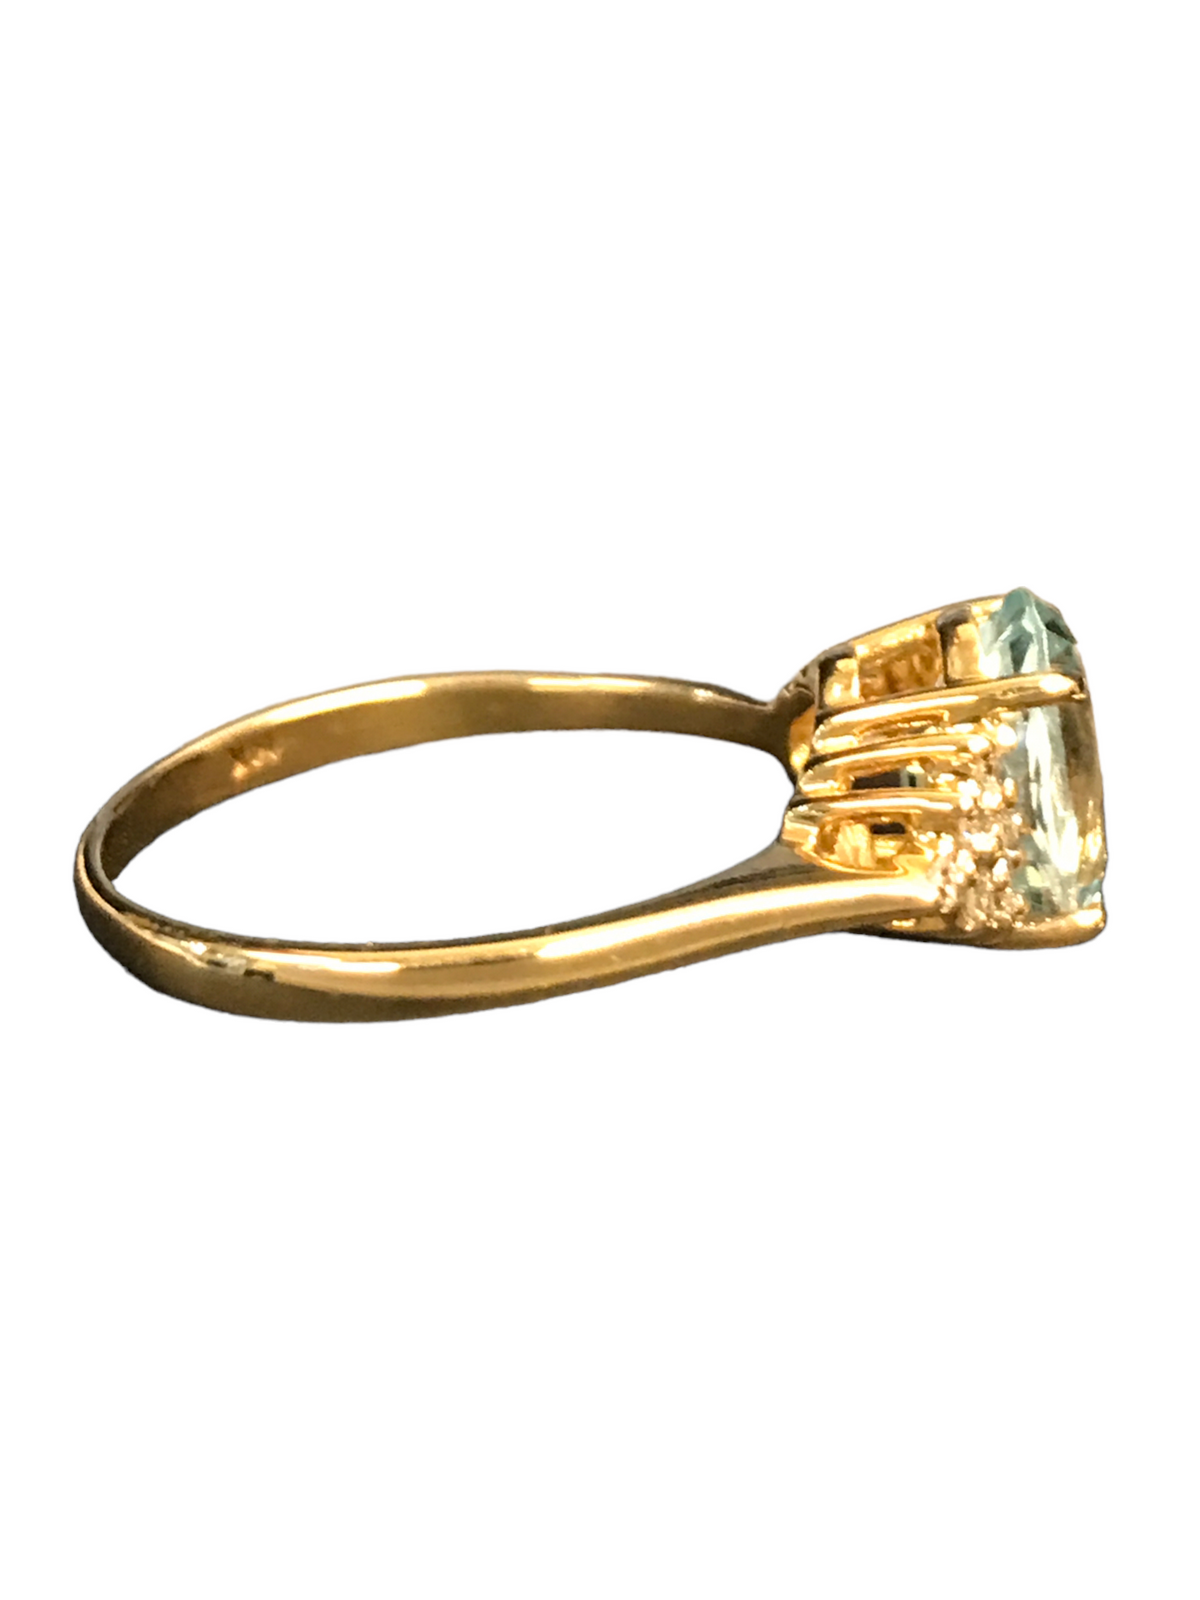 14k Yellow Gold Aquamarine and Diamond Ladies Ring Size 7.5